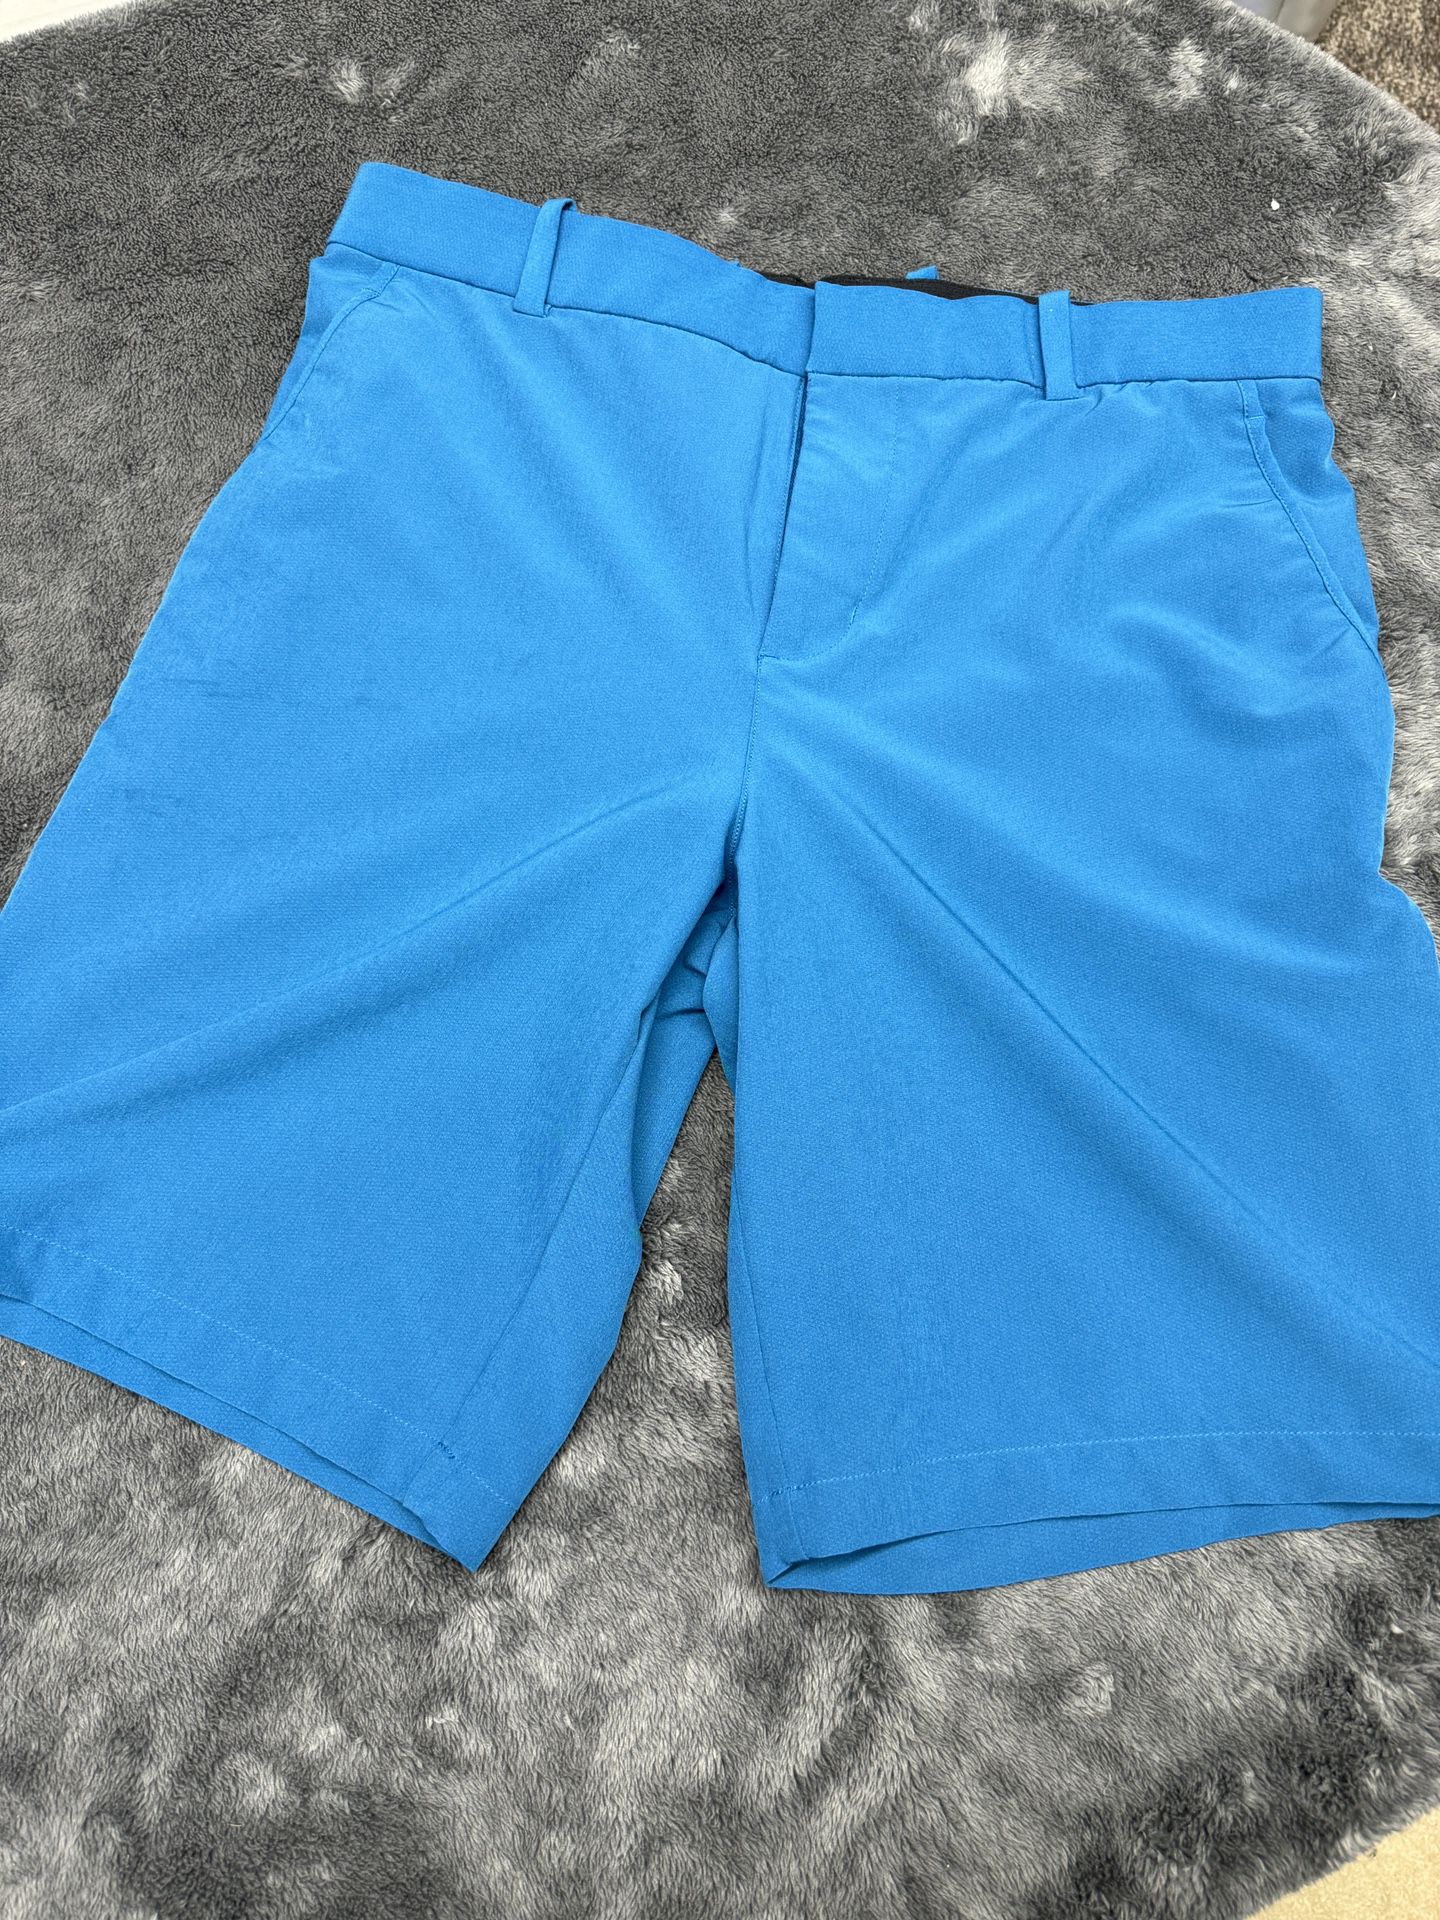 Nike Golf Men’s 34 Shorts in good shape! 